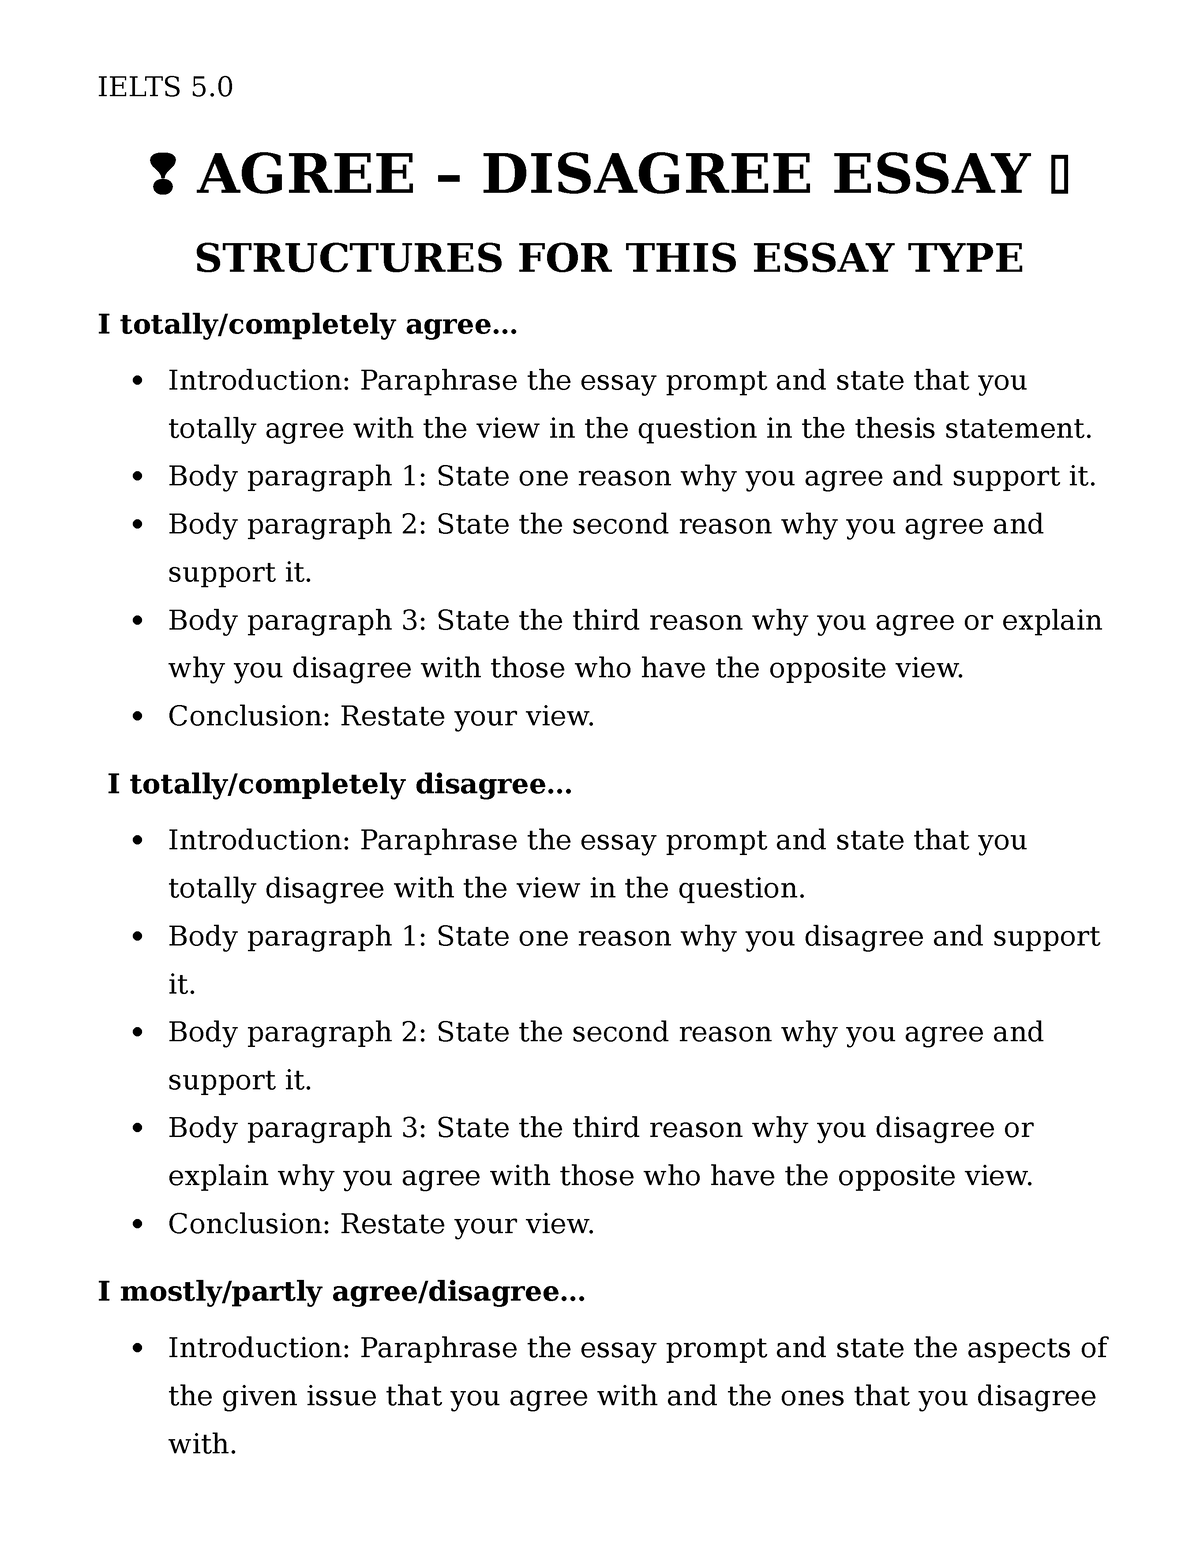 agree disagree easy essay topics